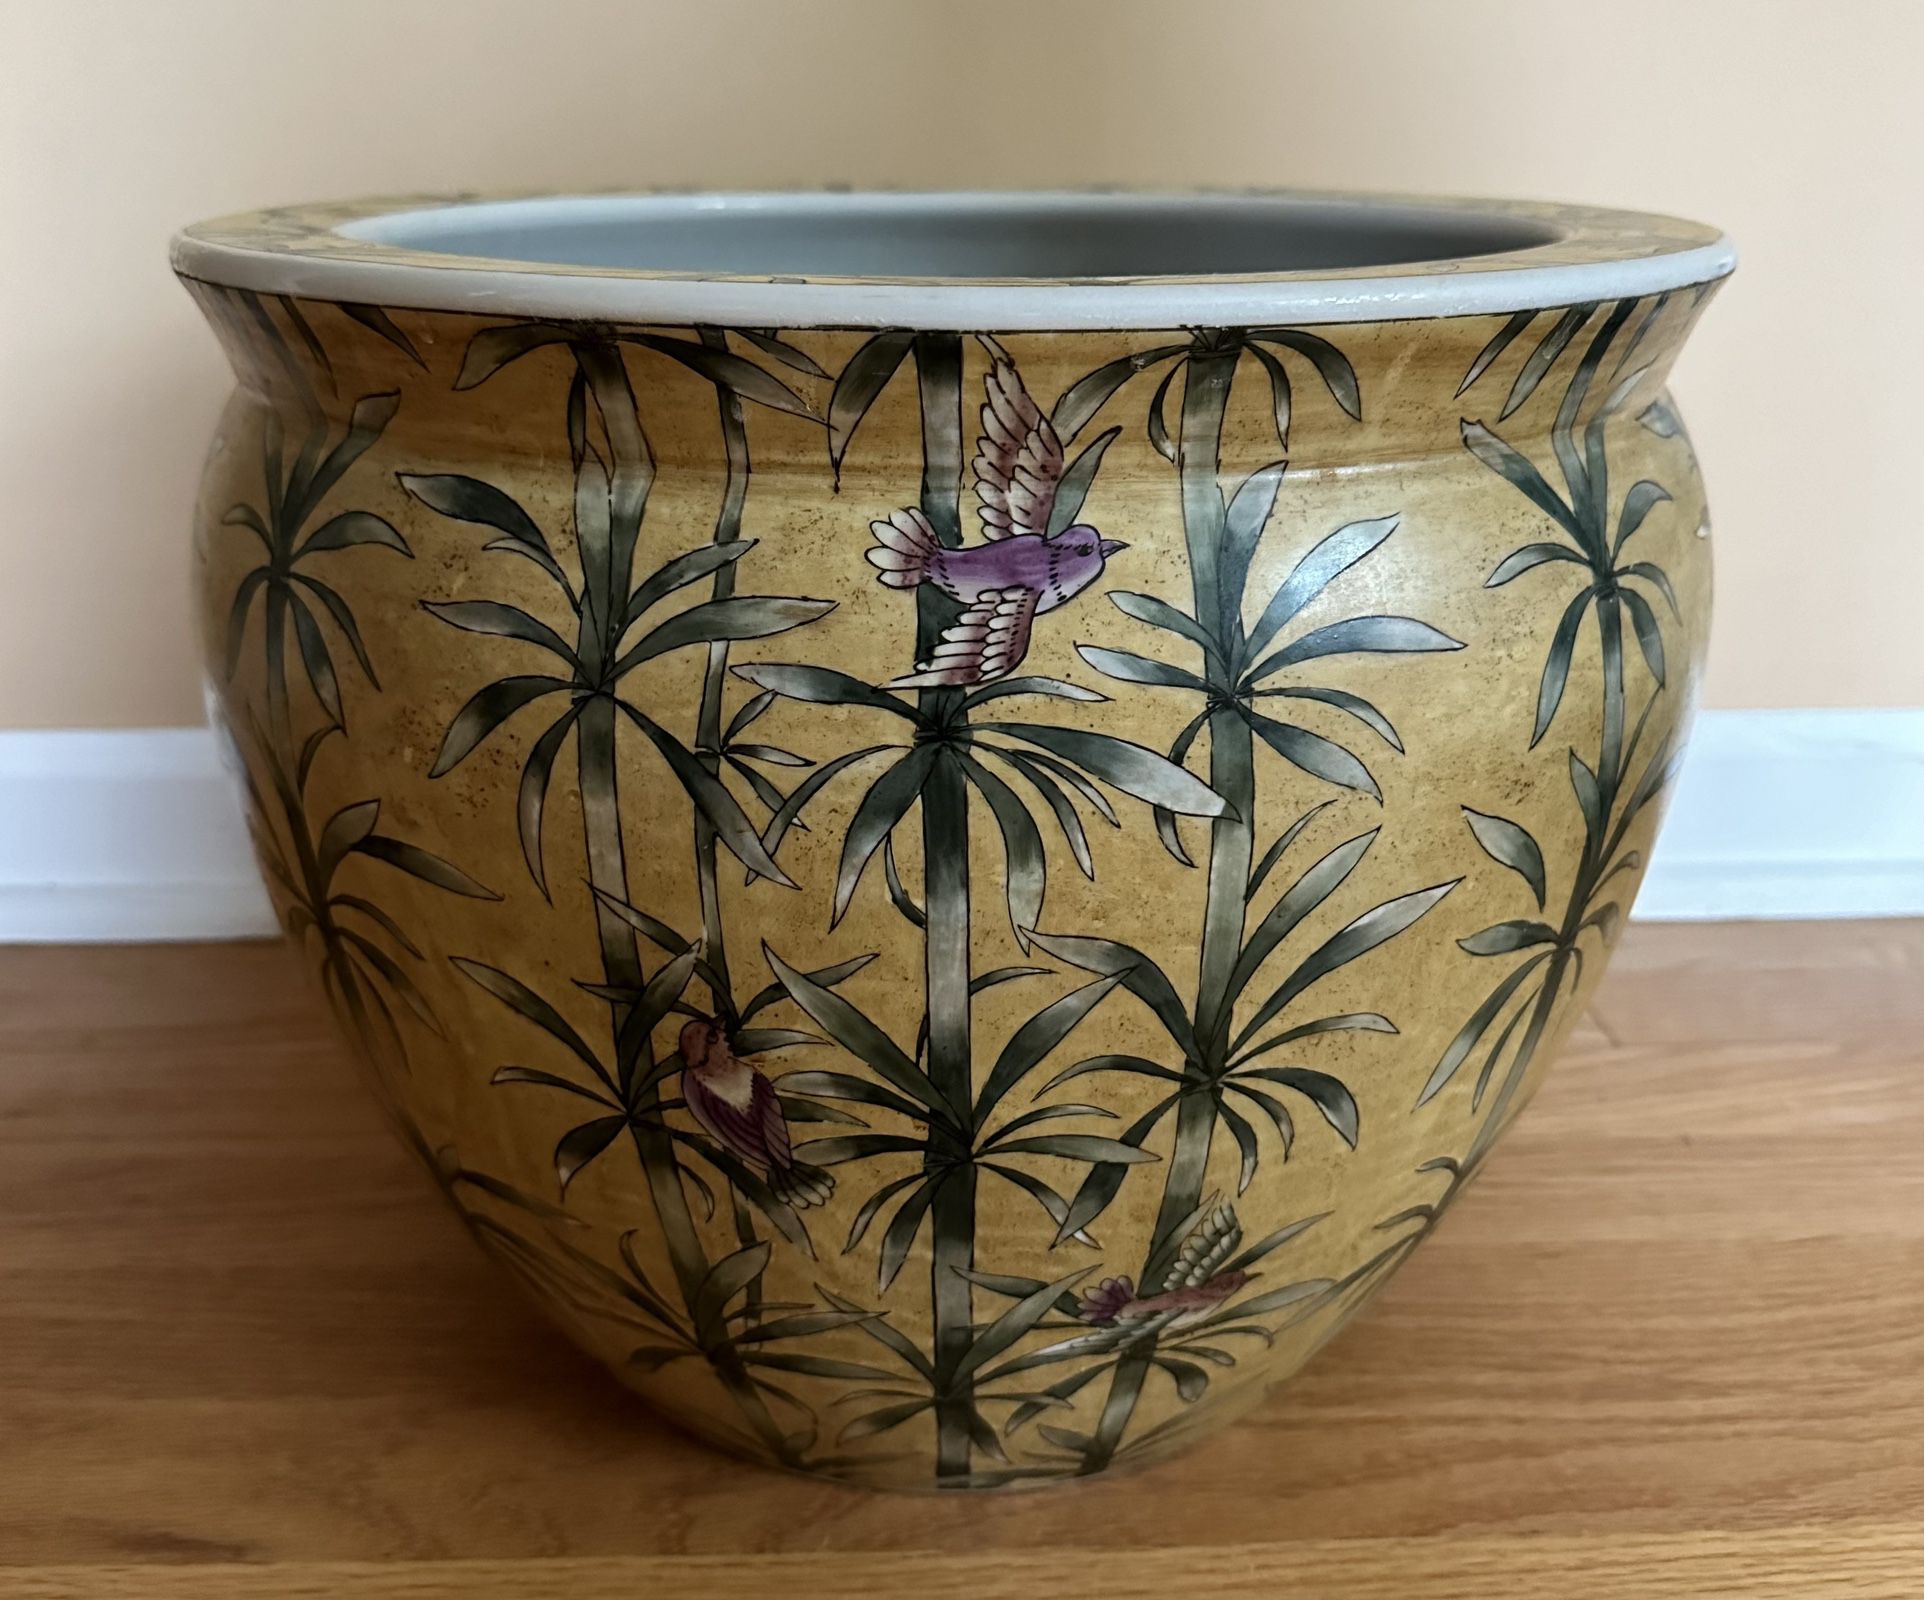 Ceramic Plant/flower Pot